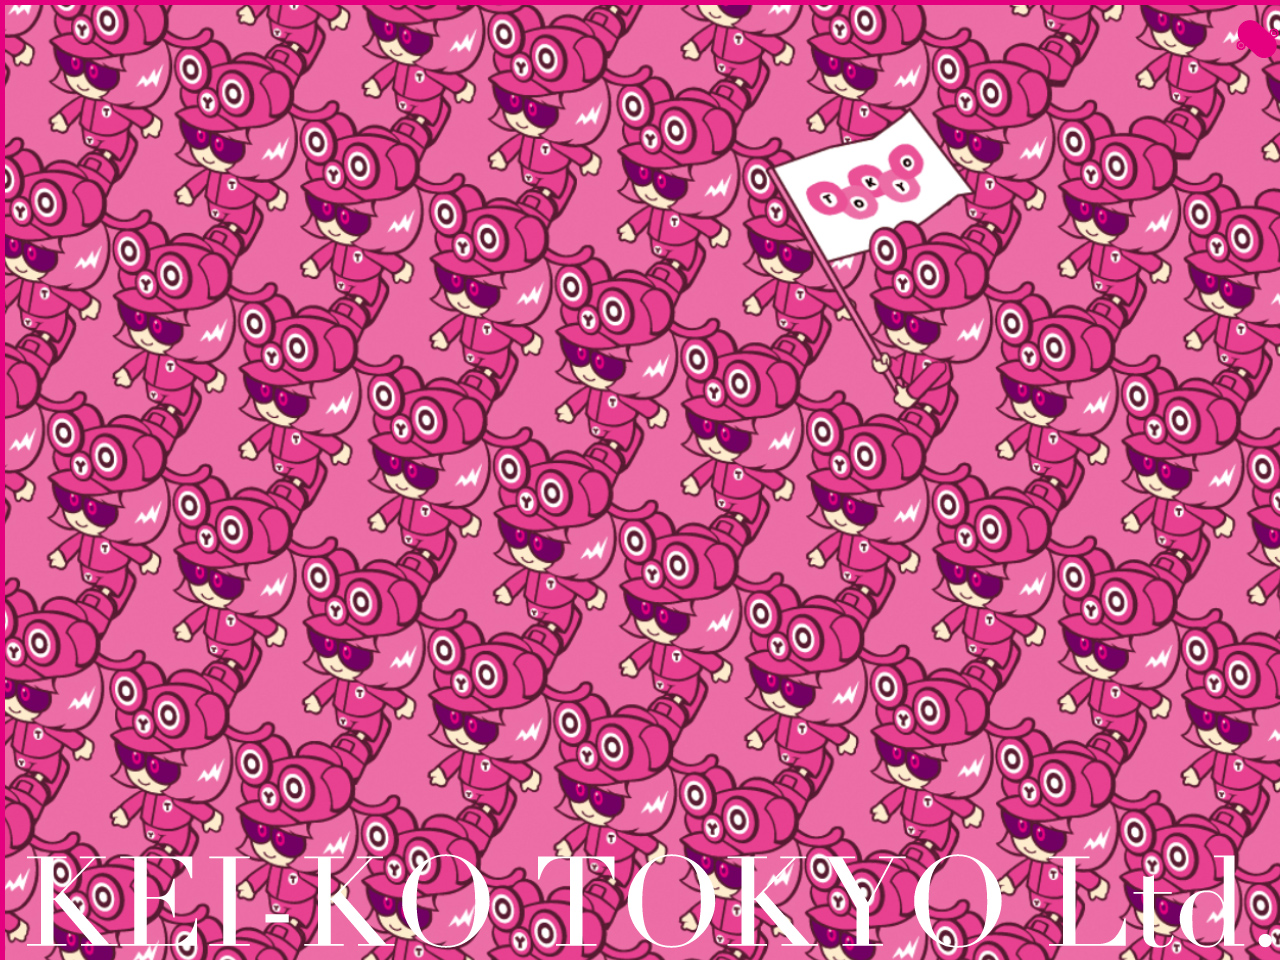 KEI-KO TOKYO LTD.